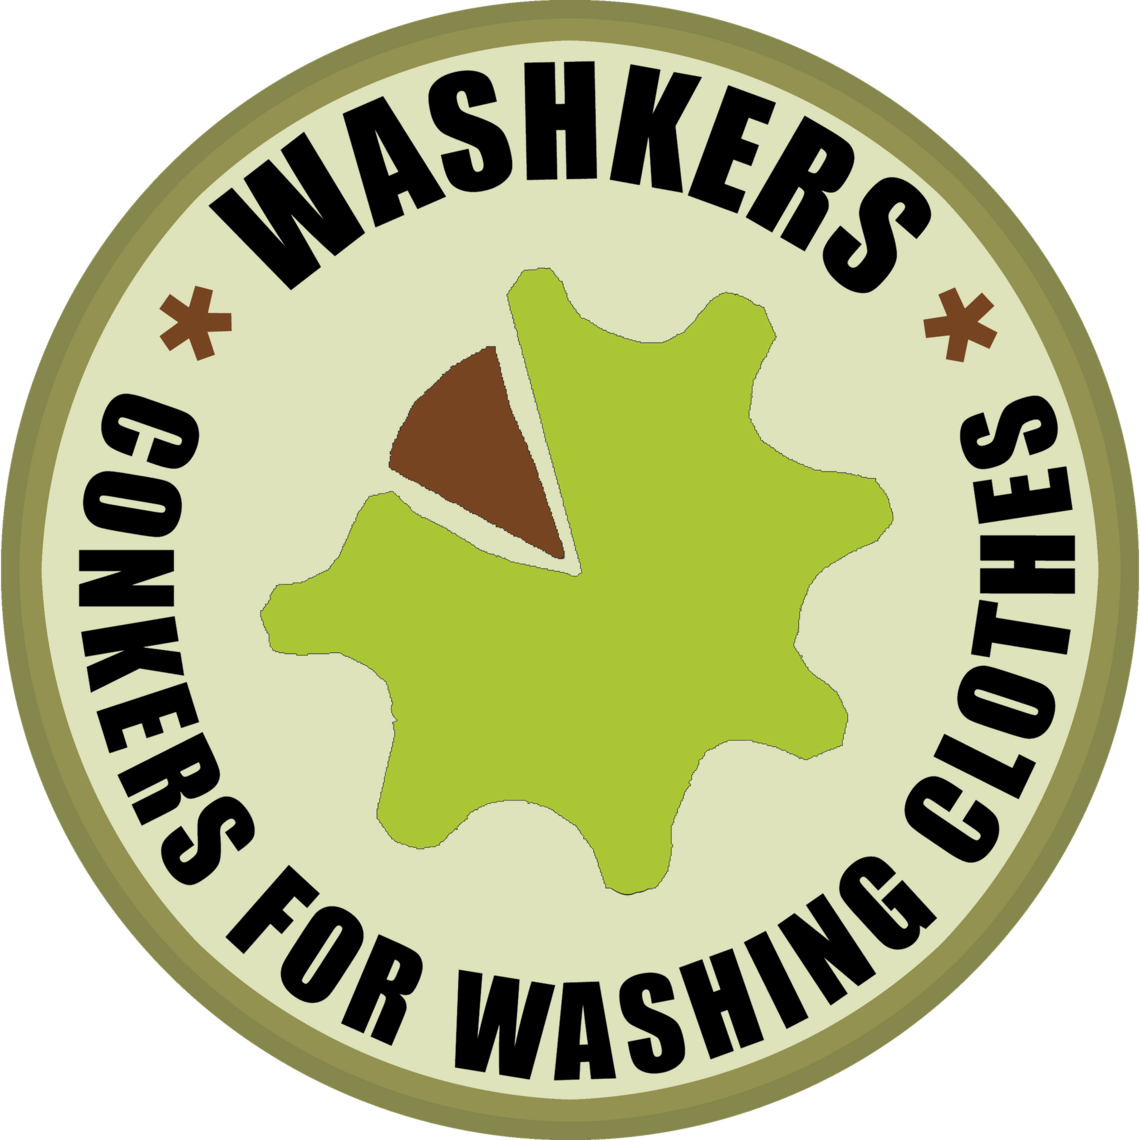 washkers logo